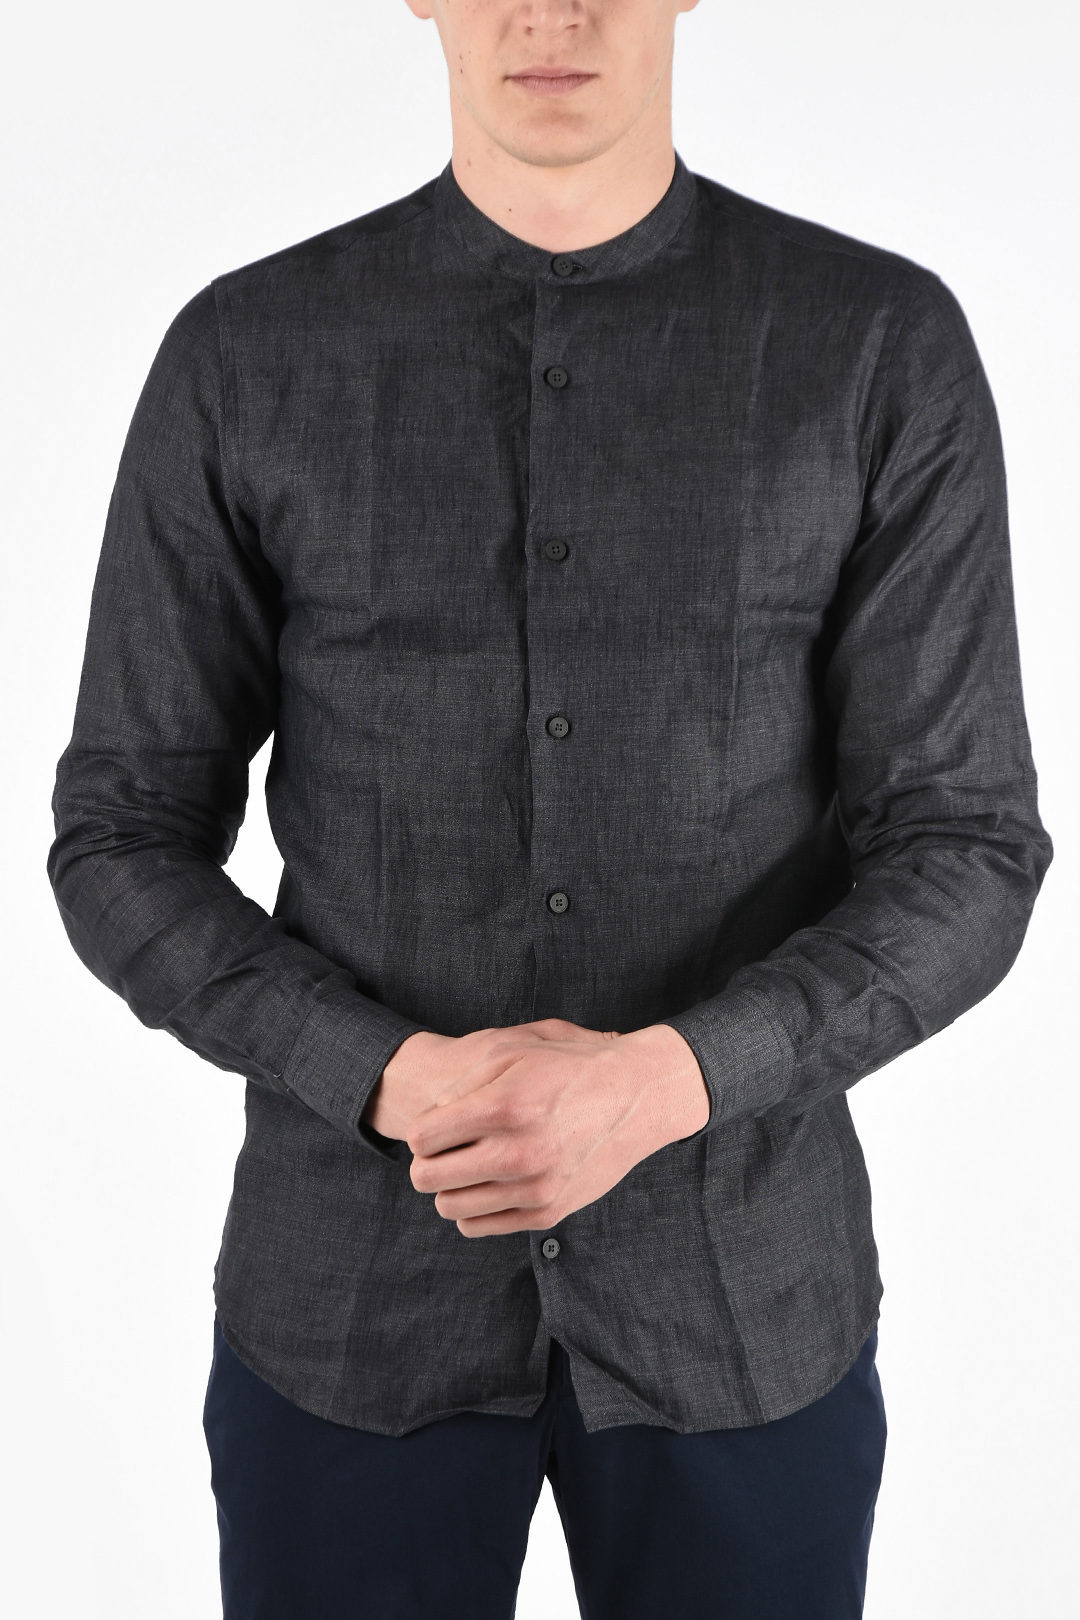 Men's black linen REGULAR Mandarin collar shirt